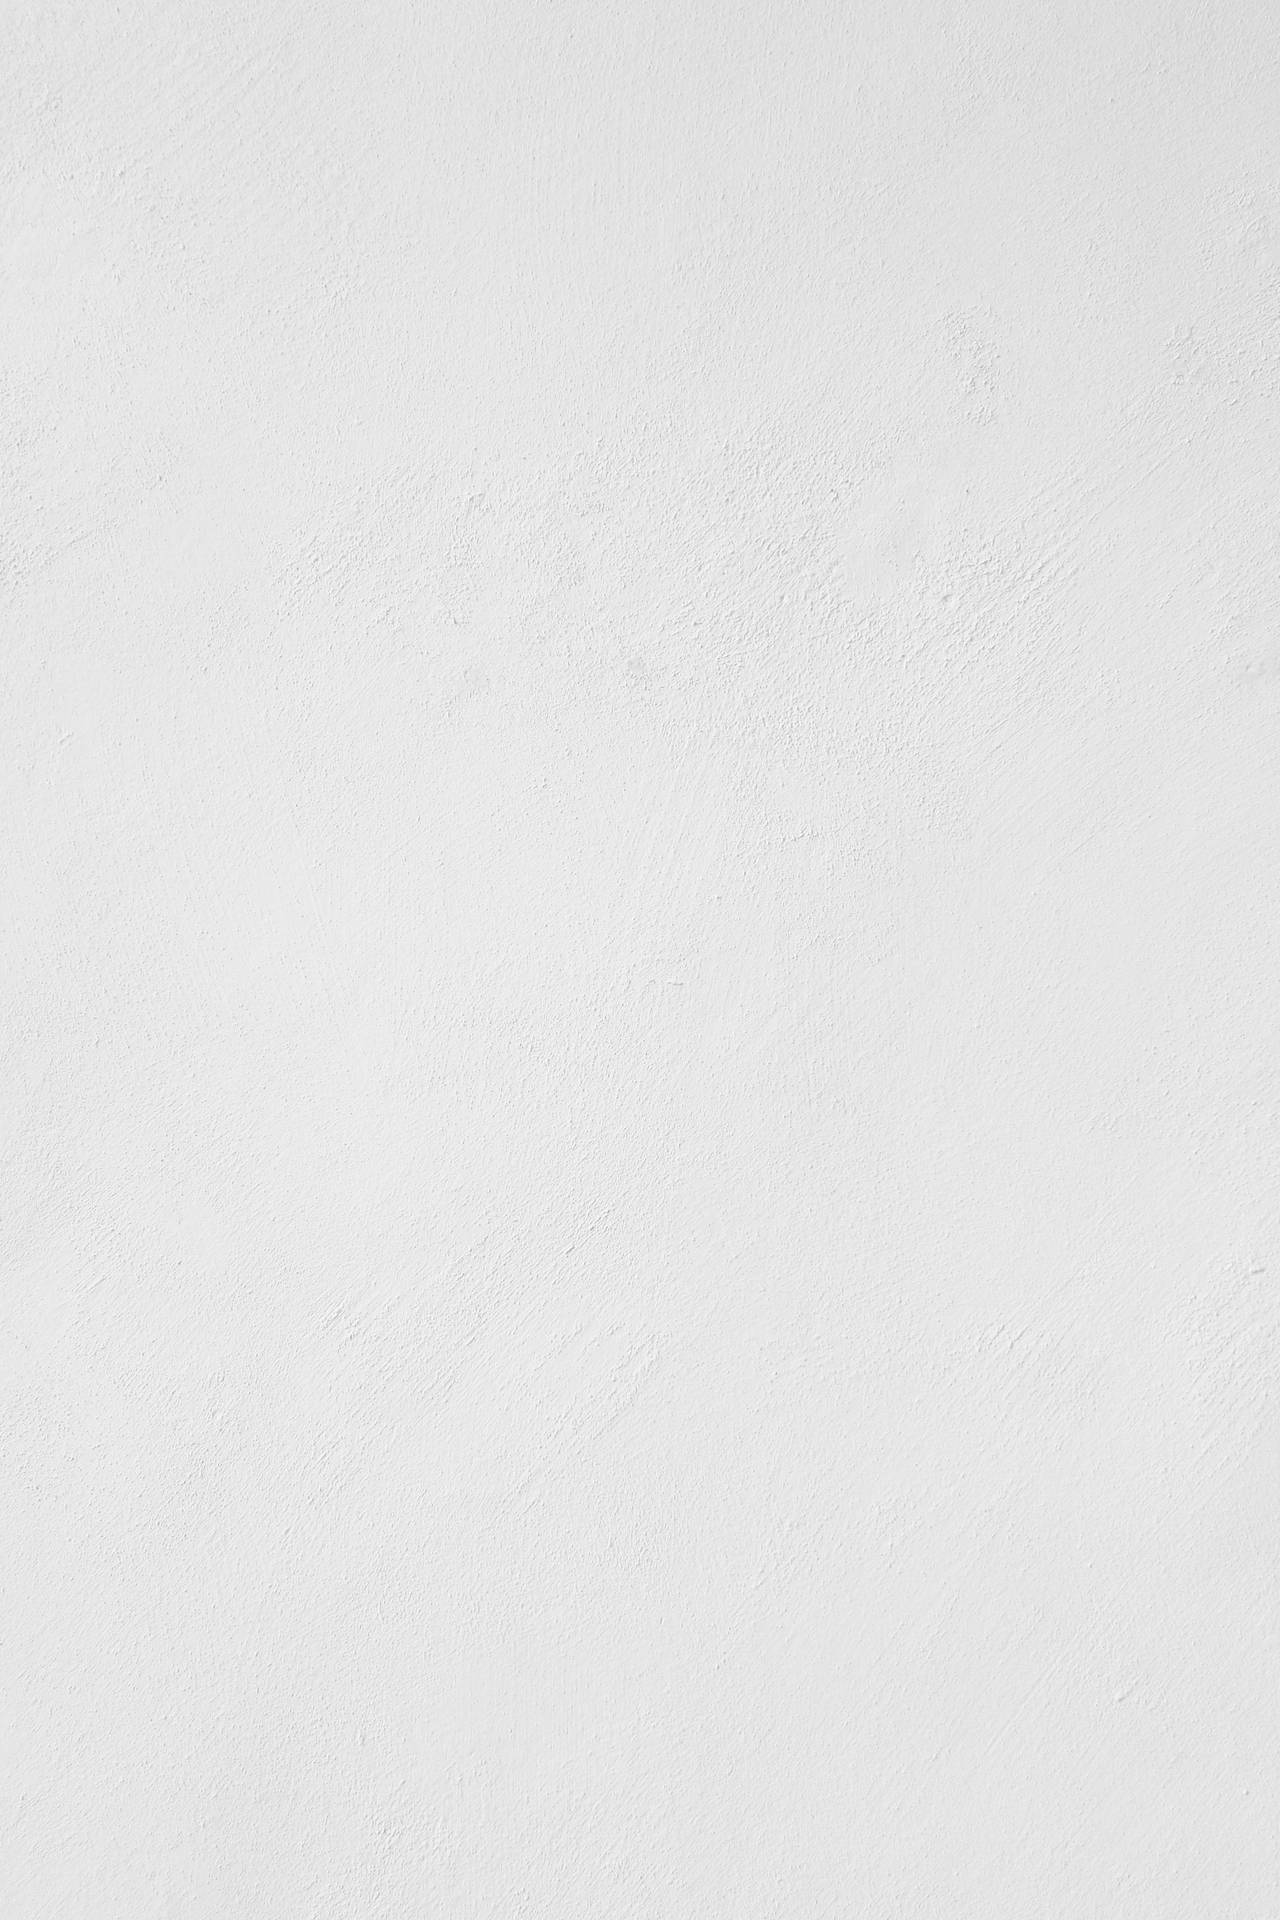 Solid White Gray Wallpaper